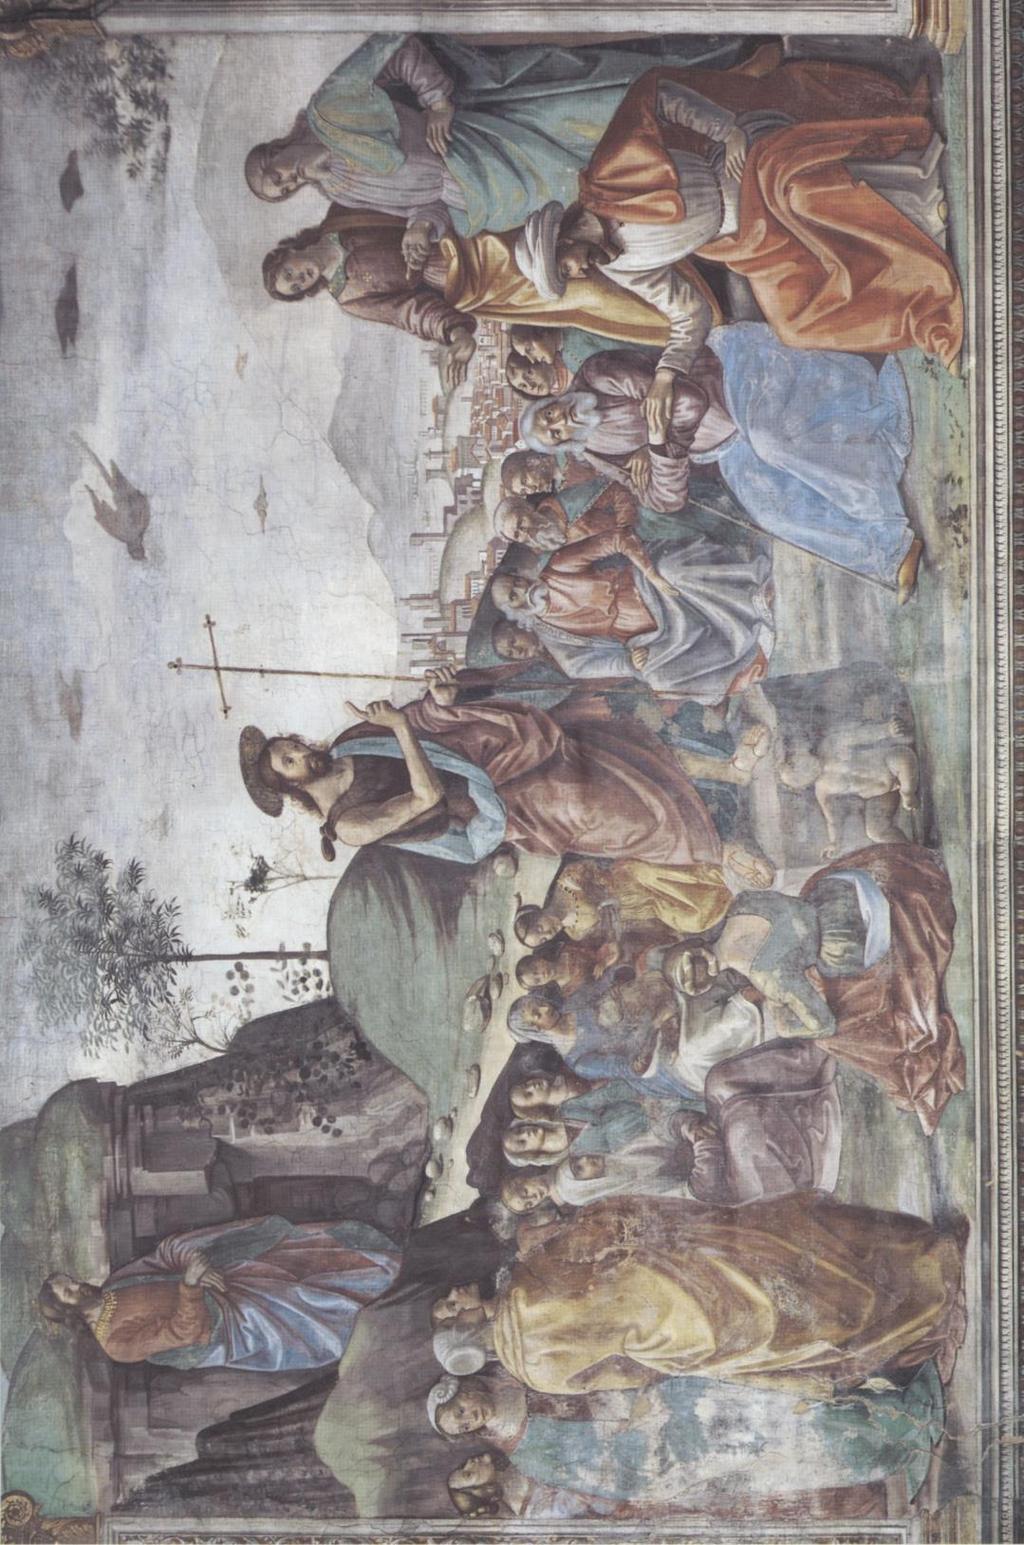 Plate 21: Domenico Bigordi called Ghirlandaio, and workshop, Preaching of St.